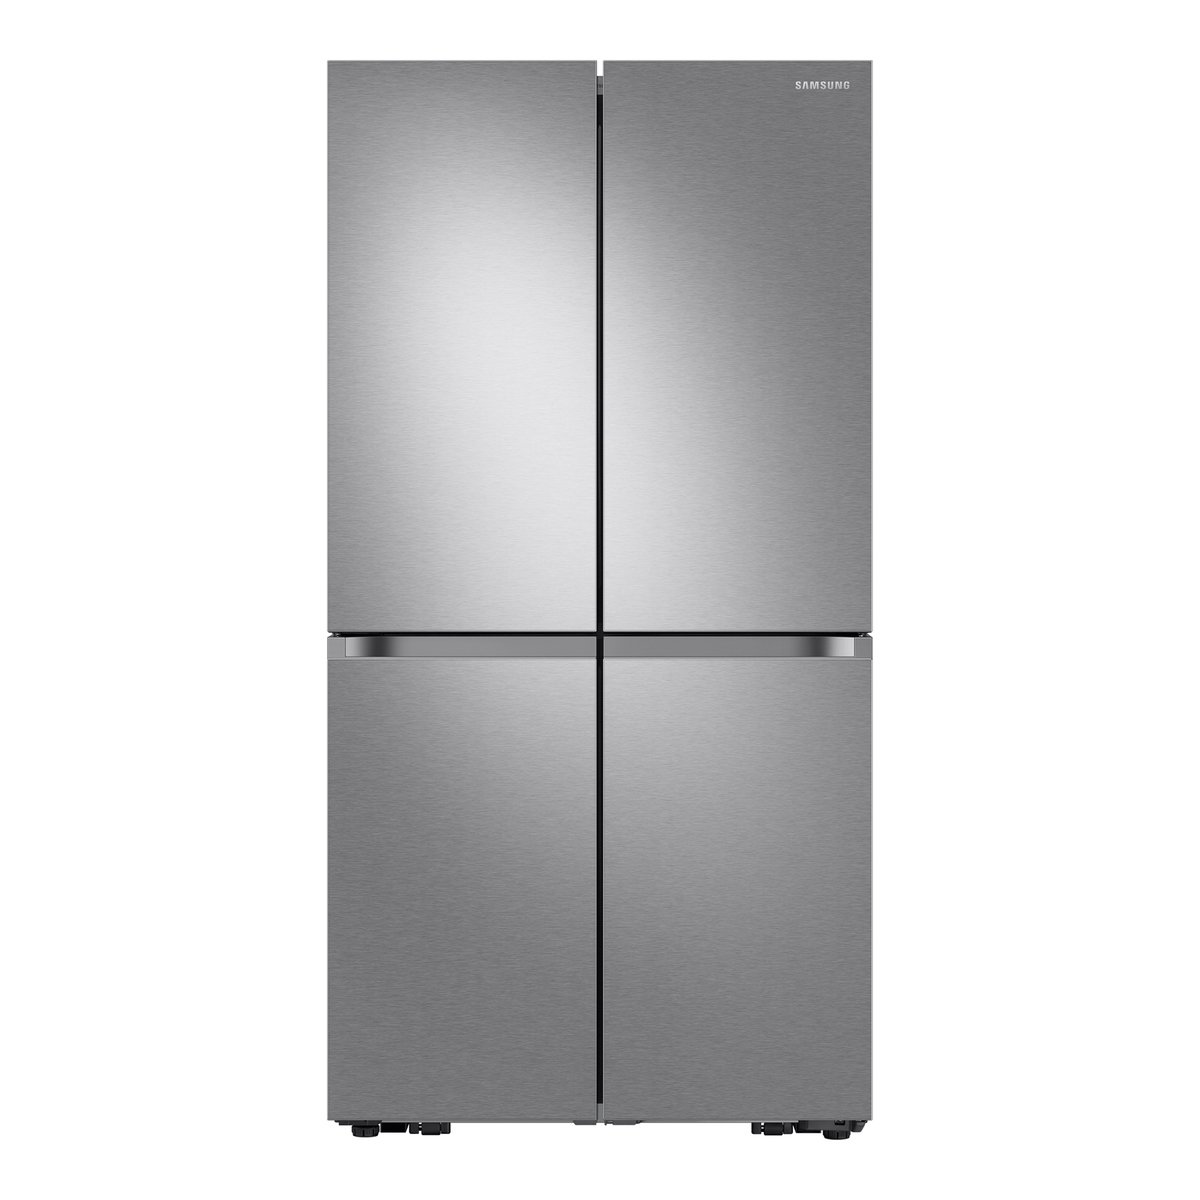 Samsung French Door Refrigerator RF85A92FASRAE 796LTR